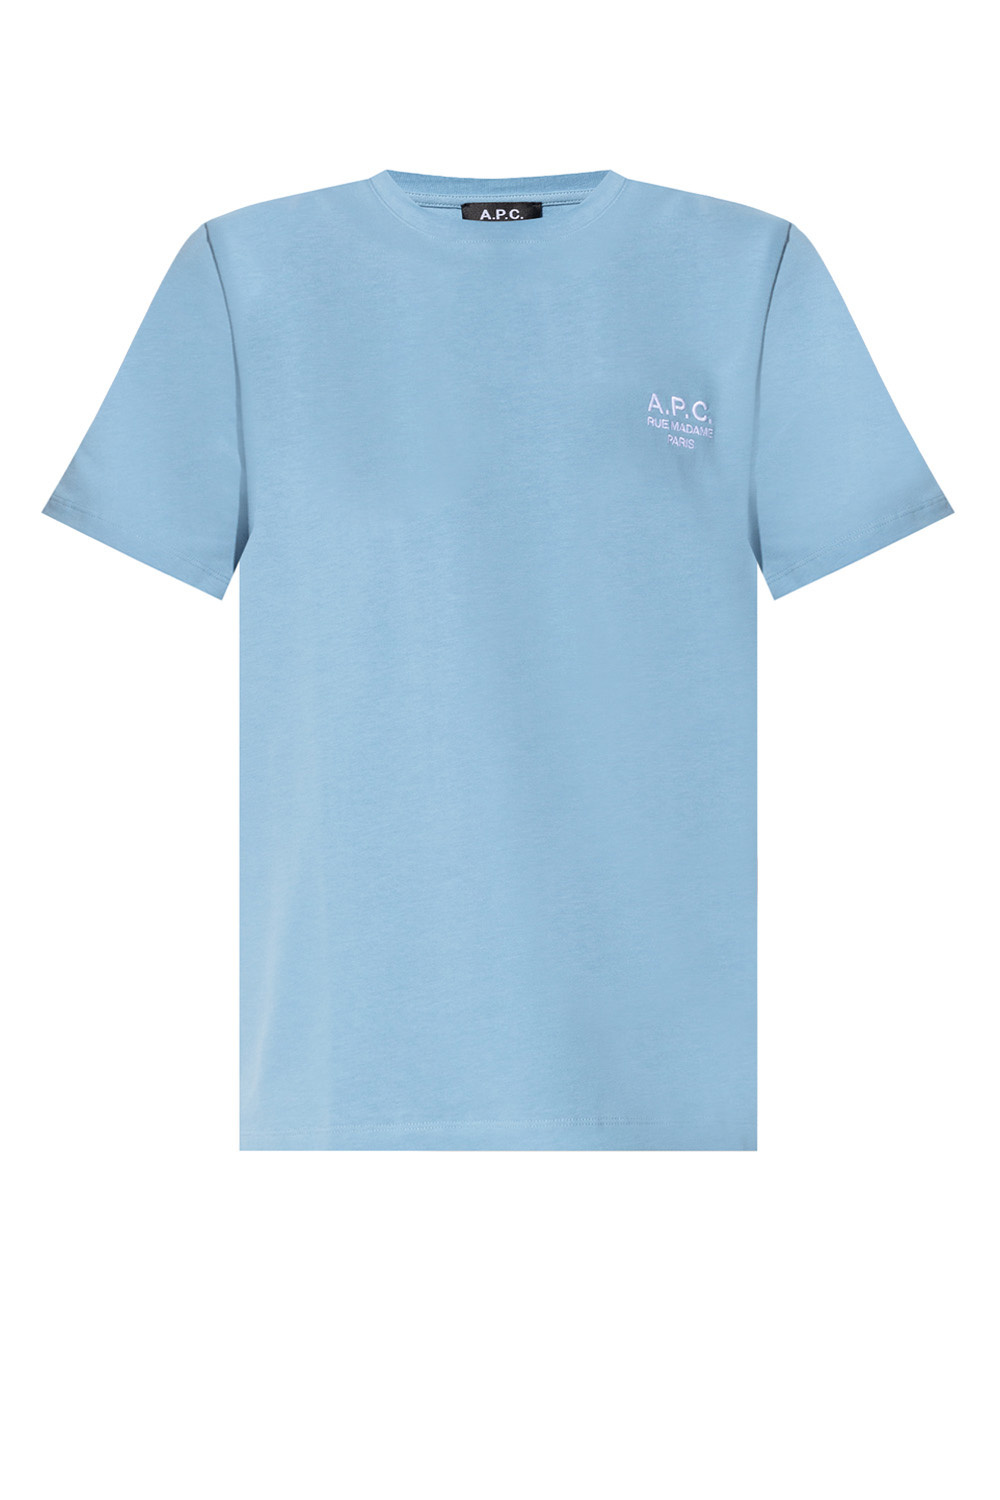 IetpShops - - med GB sweatshirt Blue Svart - embroidered Stoke Brother i - Blood Logo halsen T shirt dragkedja A.P.C.